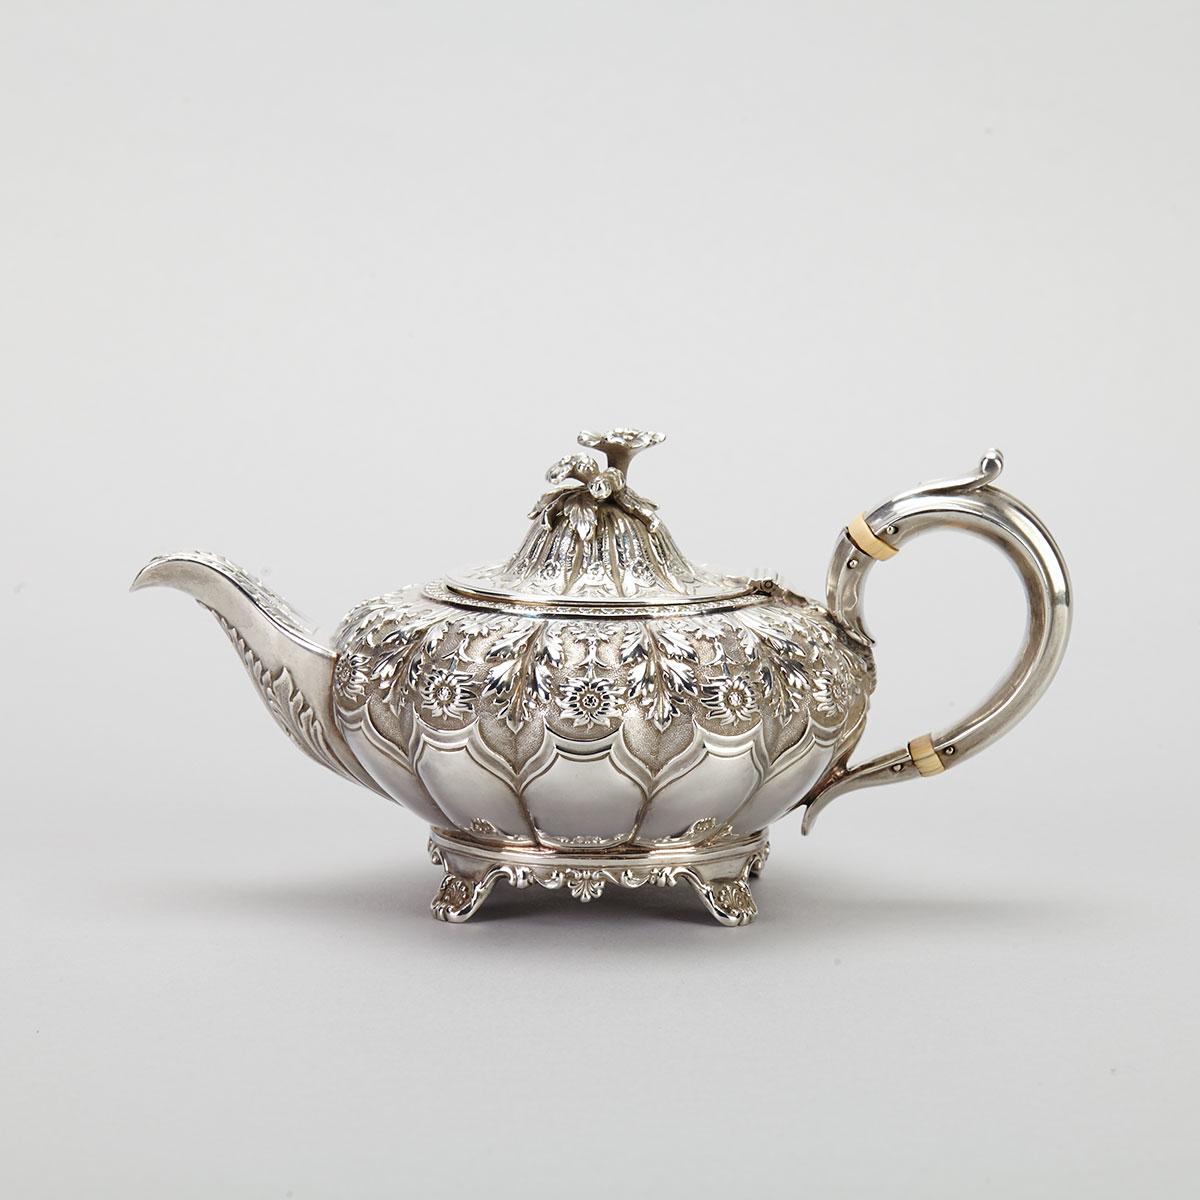 George IV Silver Small Teapot, Richard Pierce & George Burrows, London, 1827